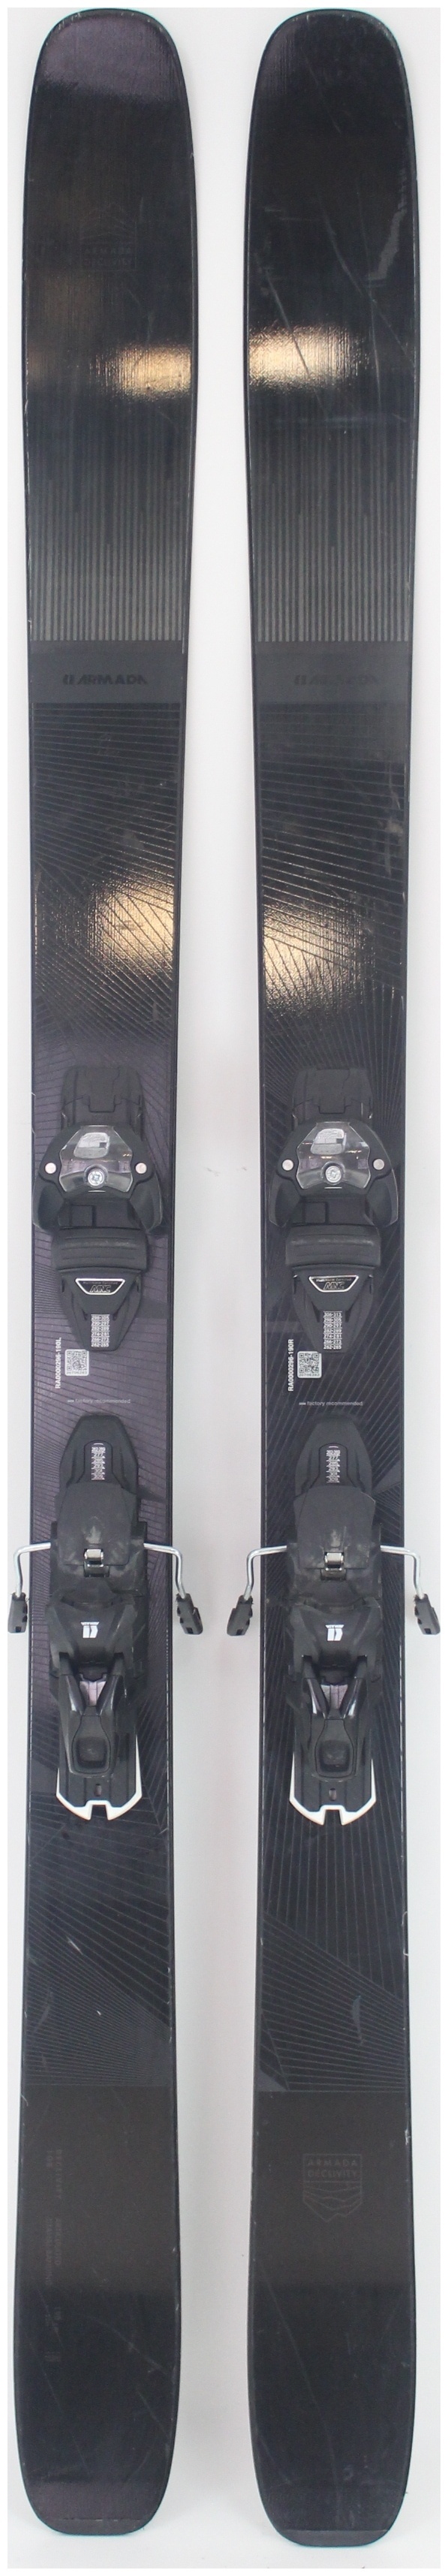 2022, Armada, Declivity 108 Ti Skis with Armada Warden 13 MNC Demo Bindings  Used Demo Skis 190cm